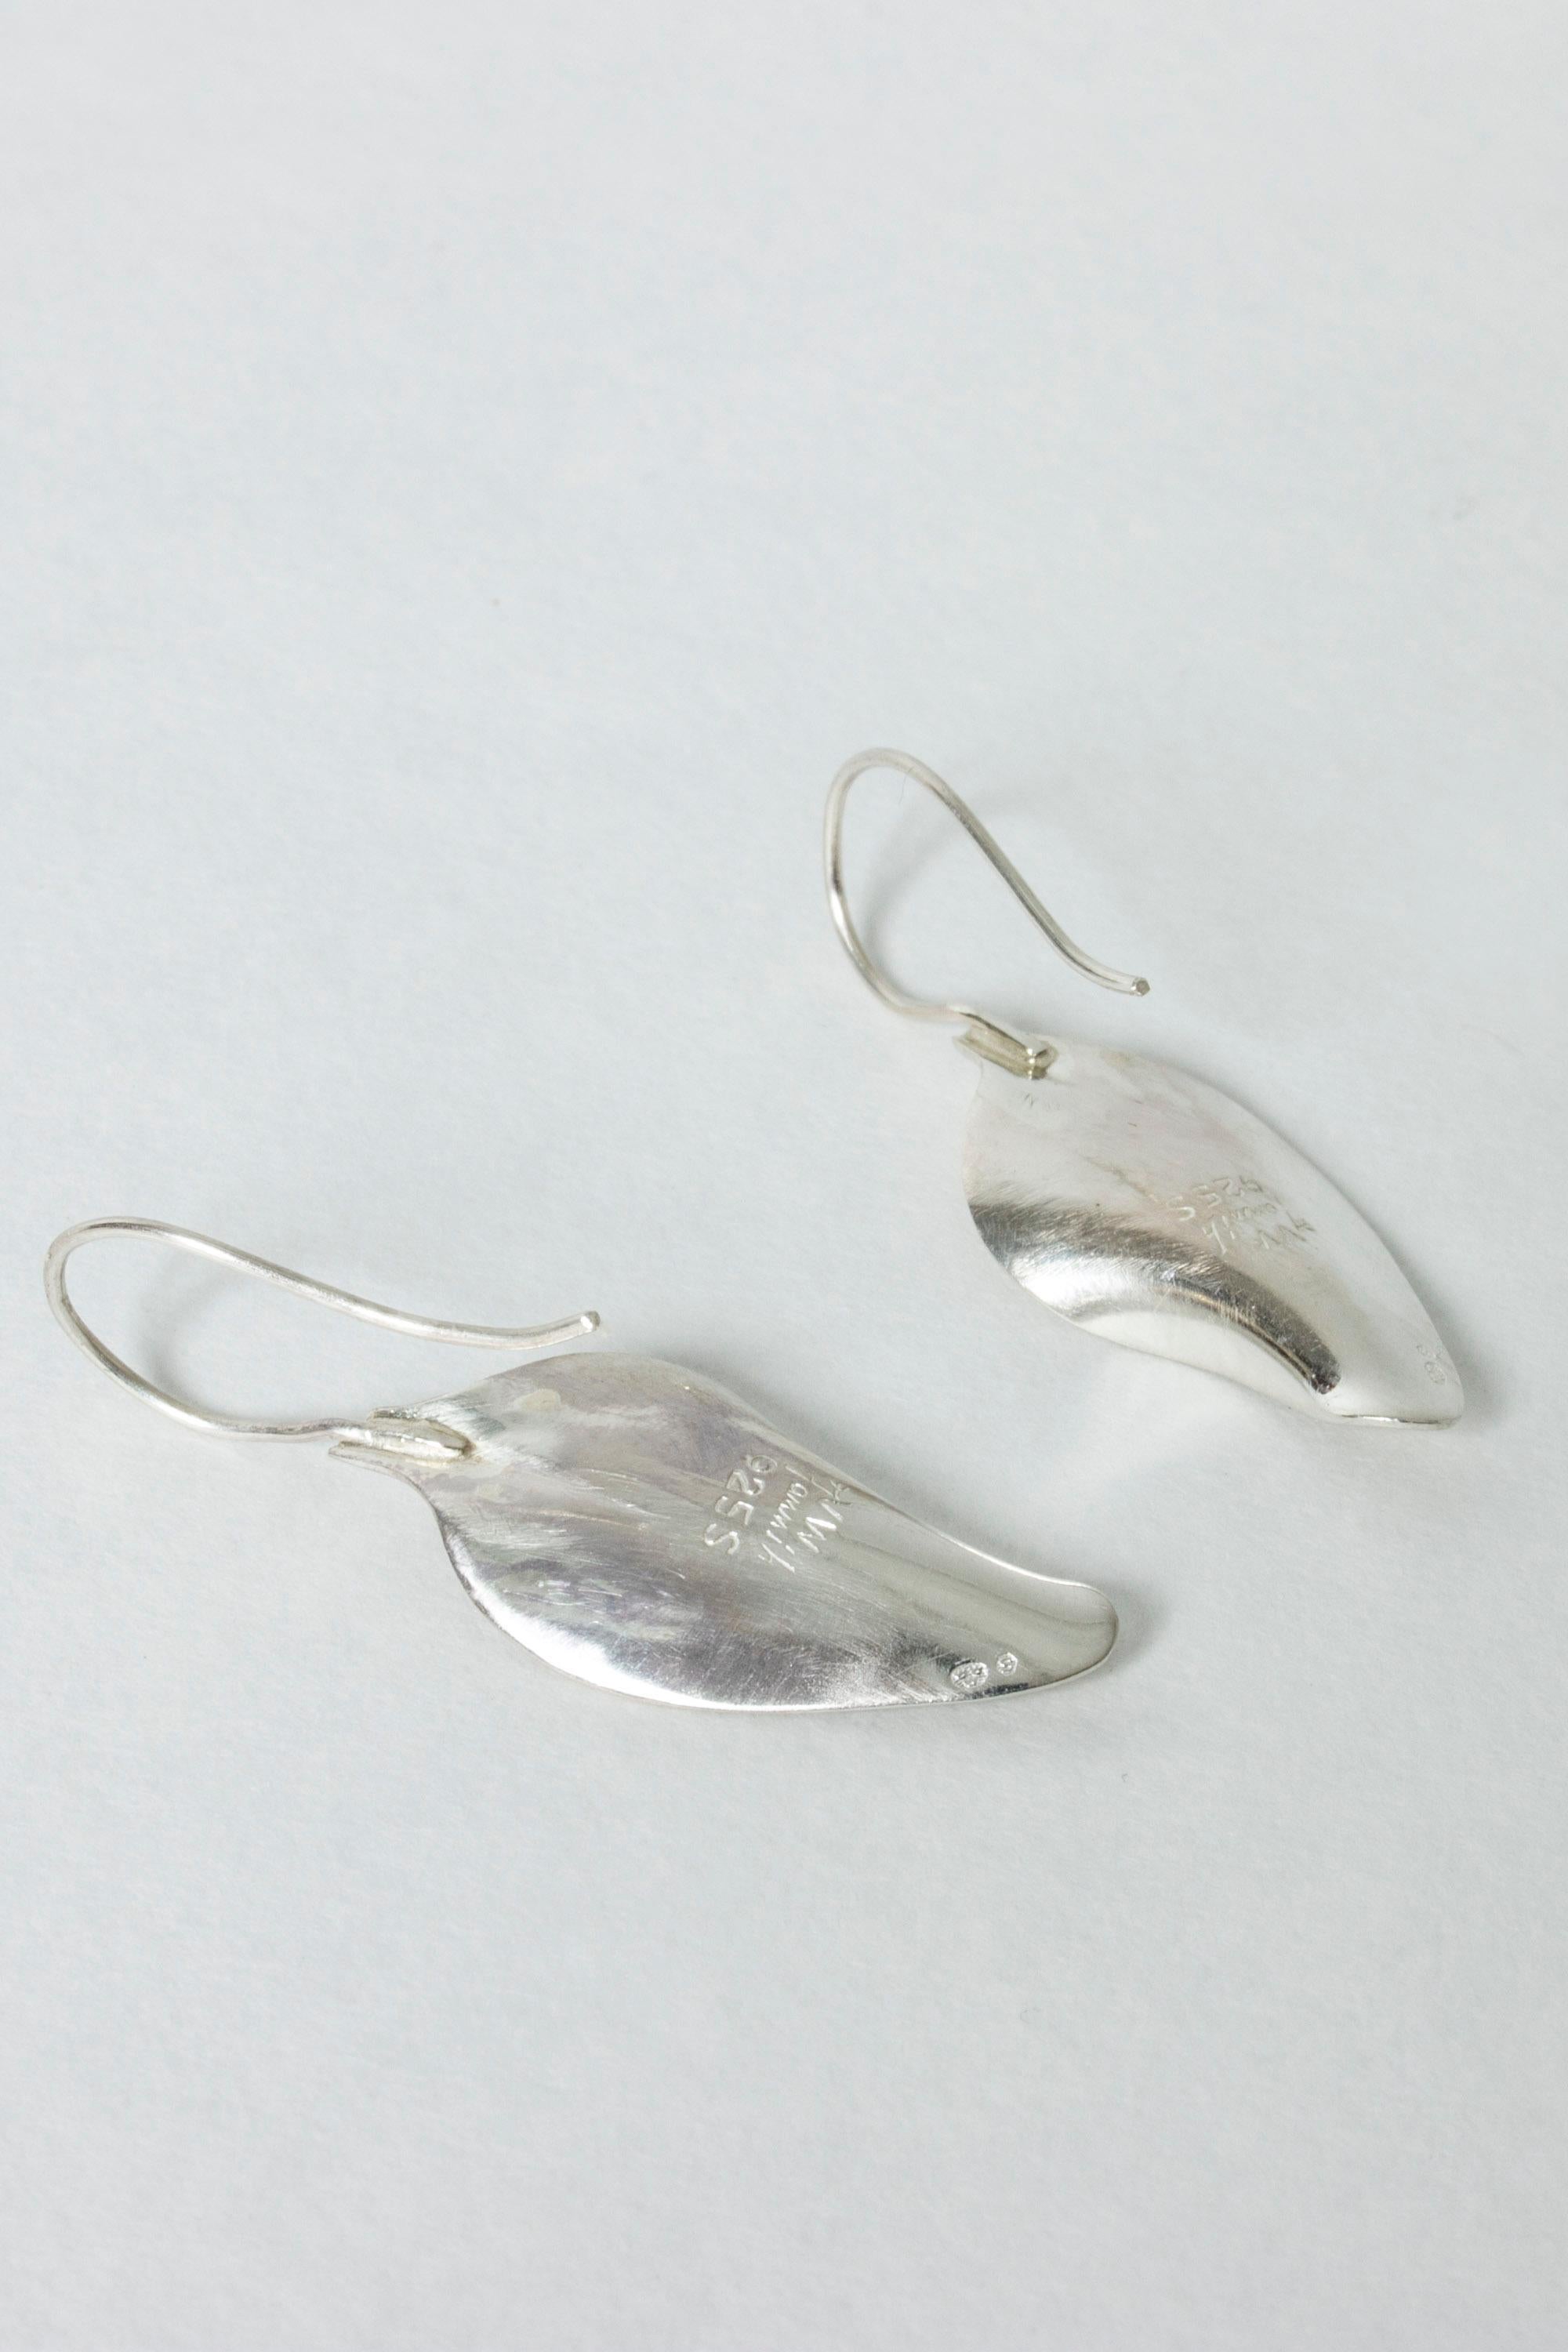 Pair of Silver Earrings by Viggo Wollny, Denmark, 1950s 3